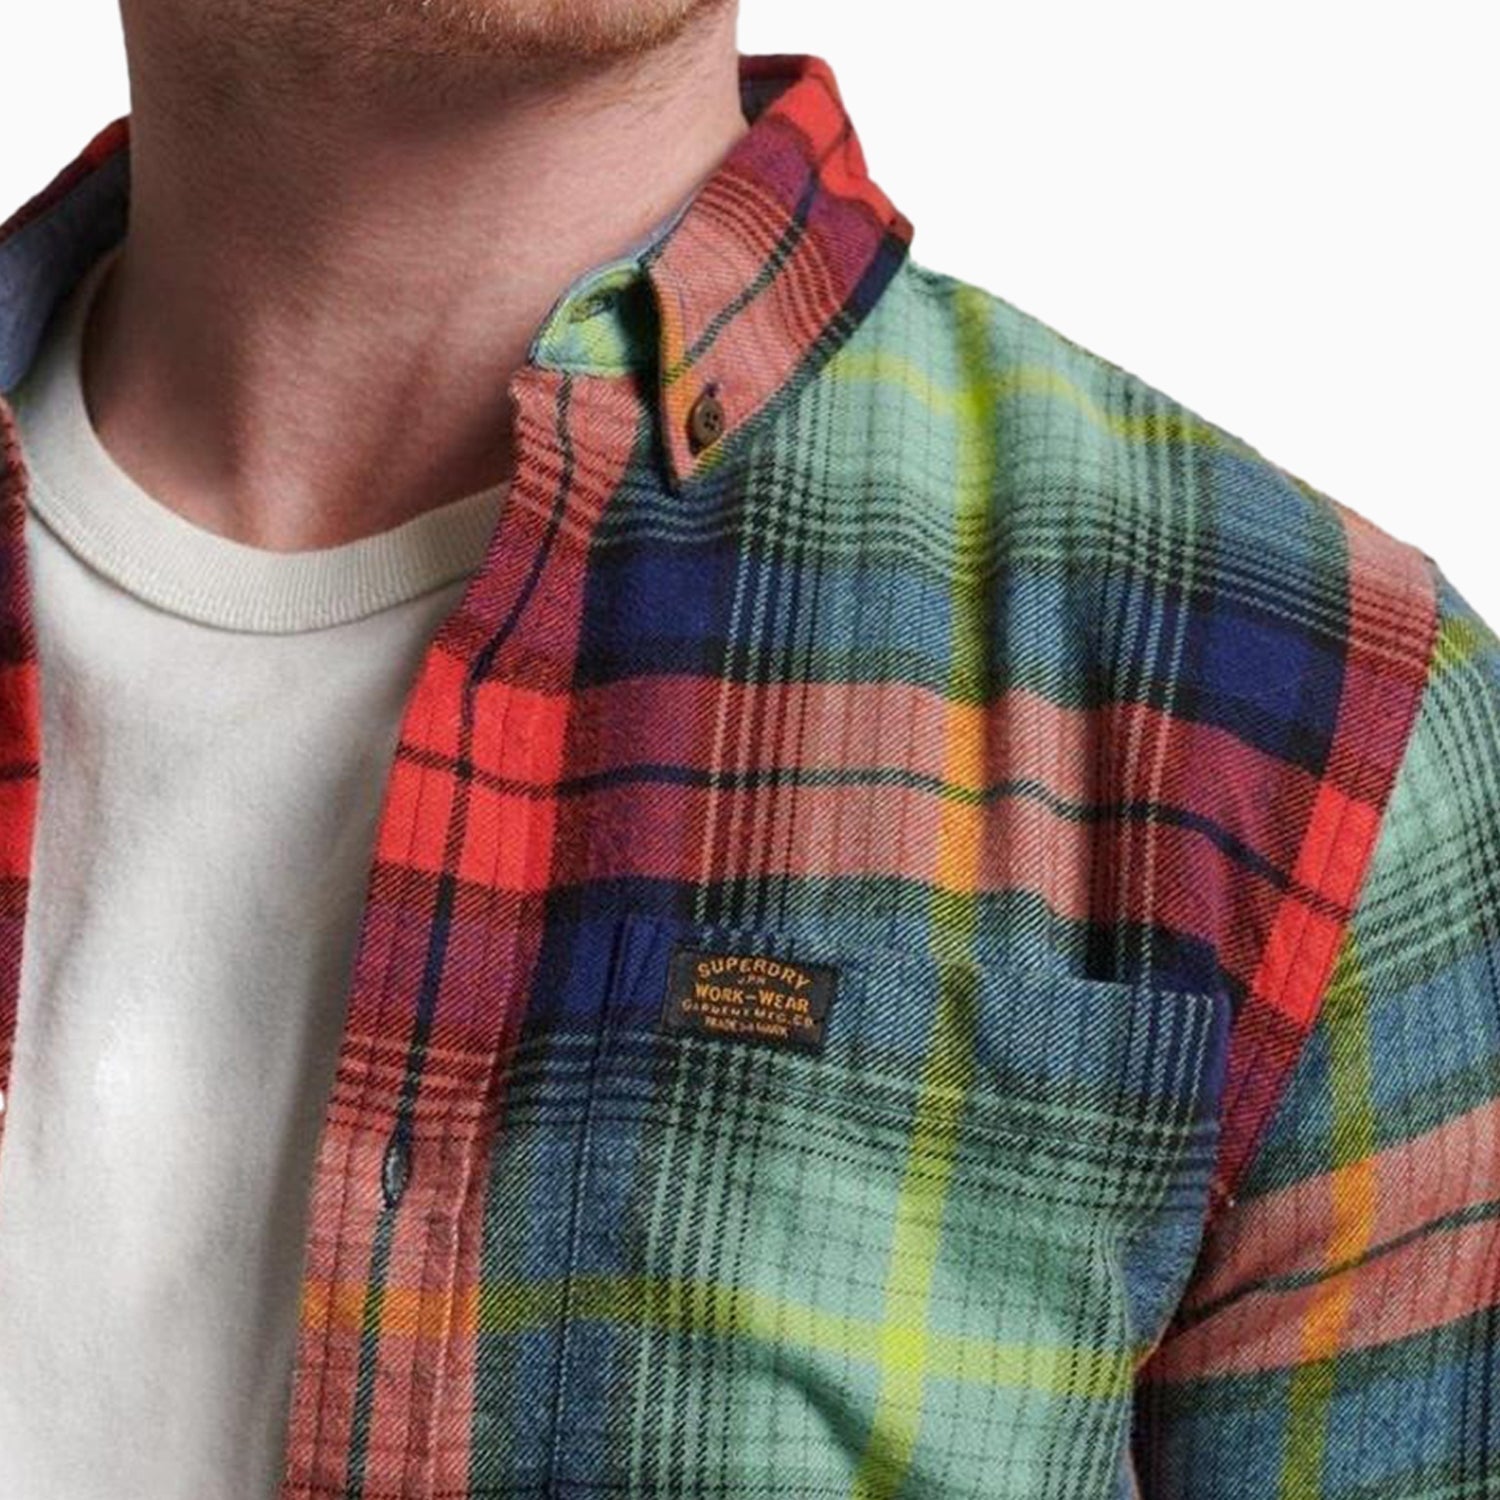 Superdry Men's Organic Cotton Vintage Lumberjack Shirt - Color: Arizona Check - Tops and Bottoms USA -